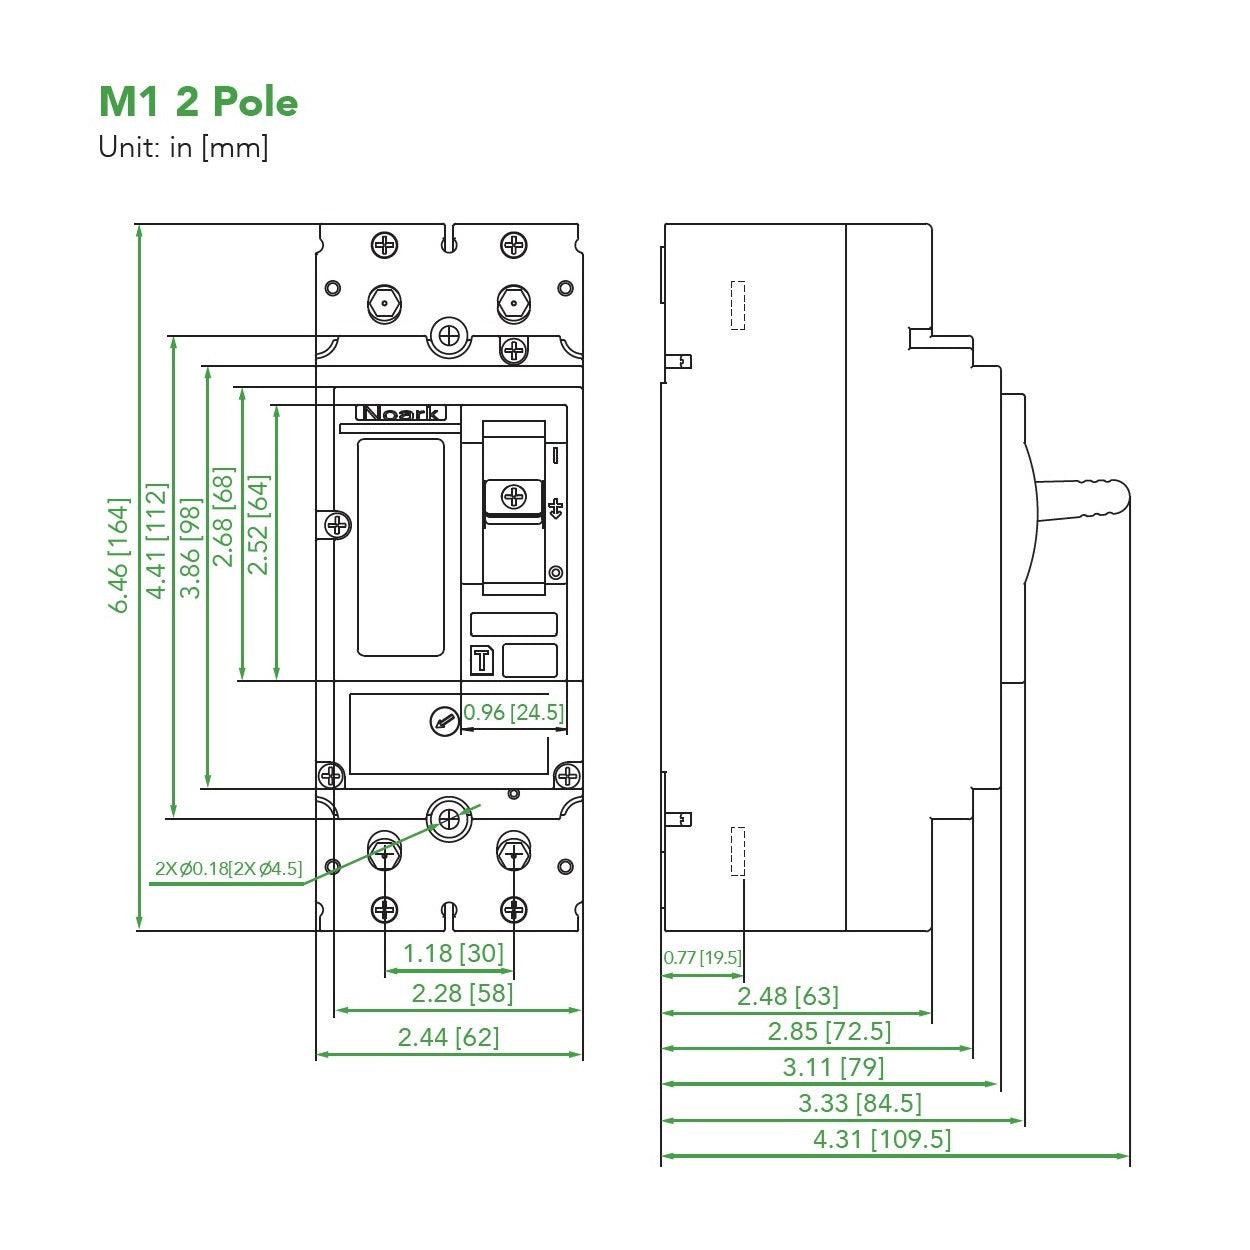 NOARK® Molded Case Circuit Breaker 125A, 2P IC Class N | M1N125T22L - Forces Inc